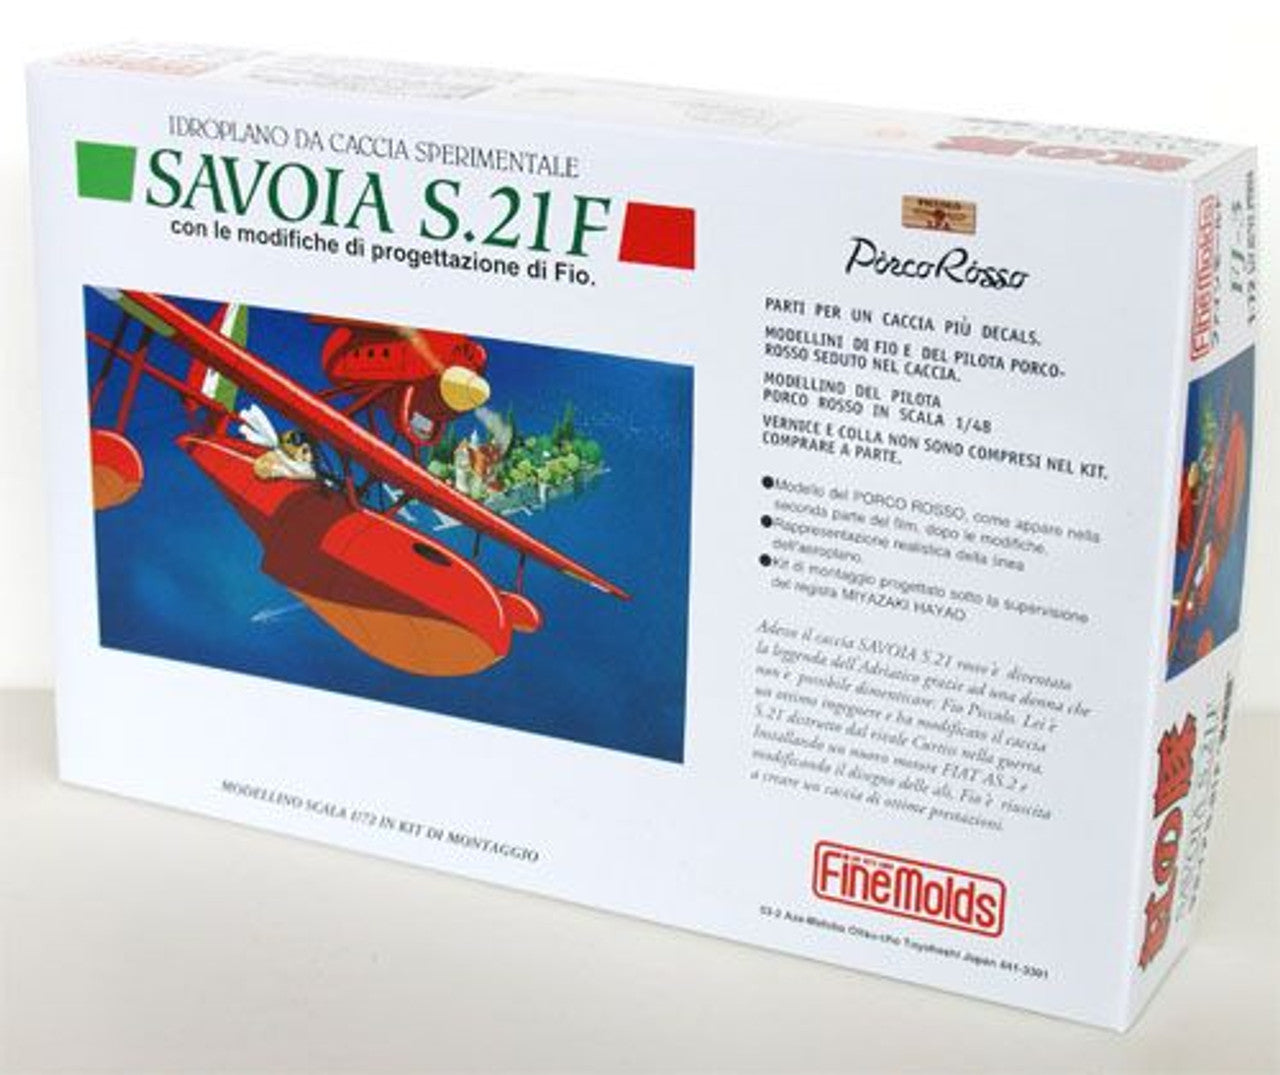 Fine Molds 1/72 Studio Ghibli Porco Rosso Savoia S.21F Seaplane - BanzaiHobby